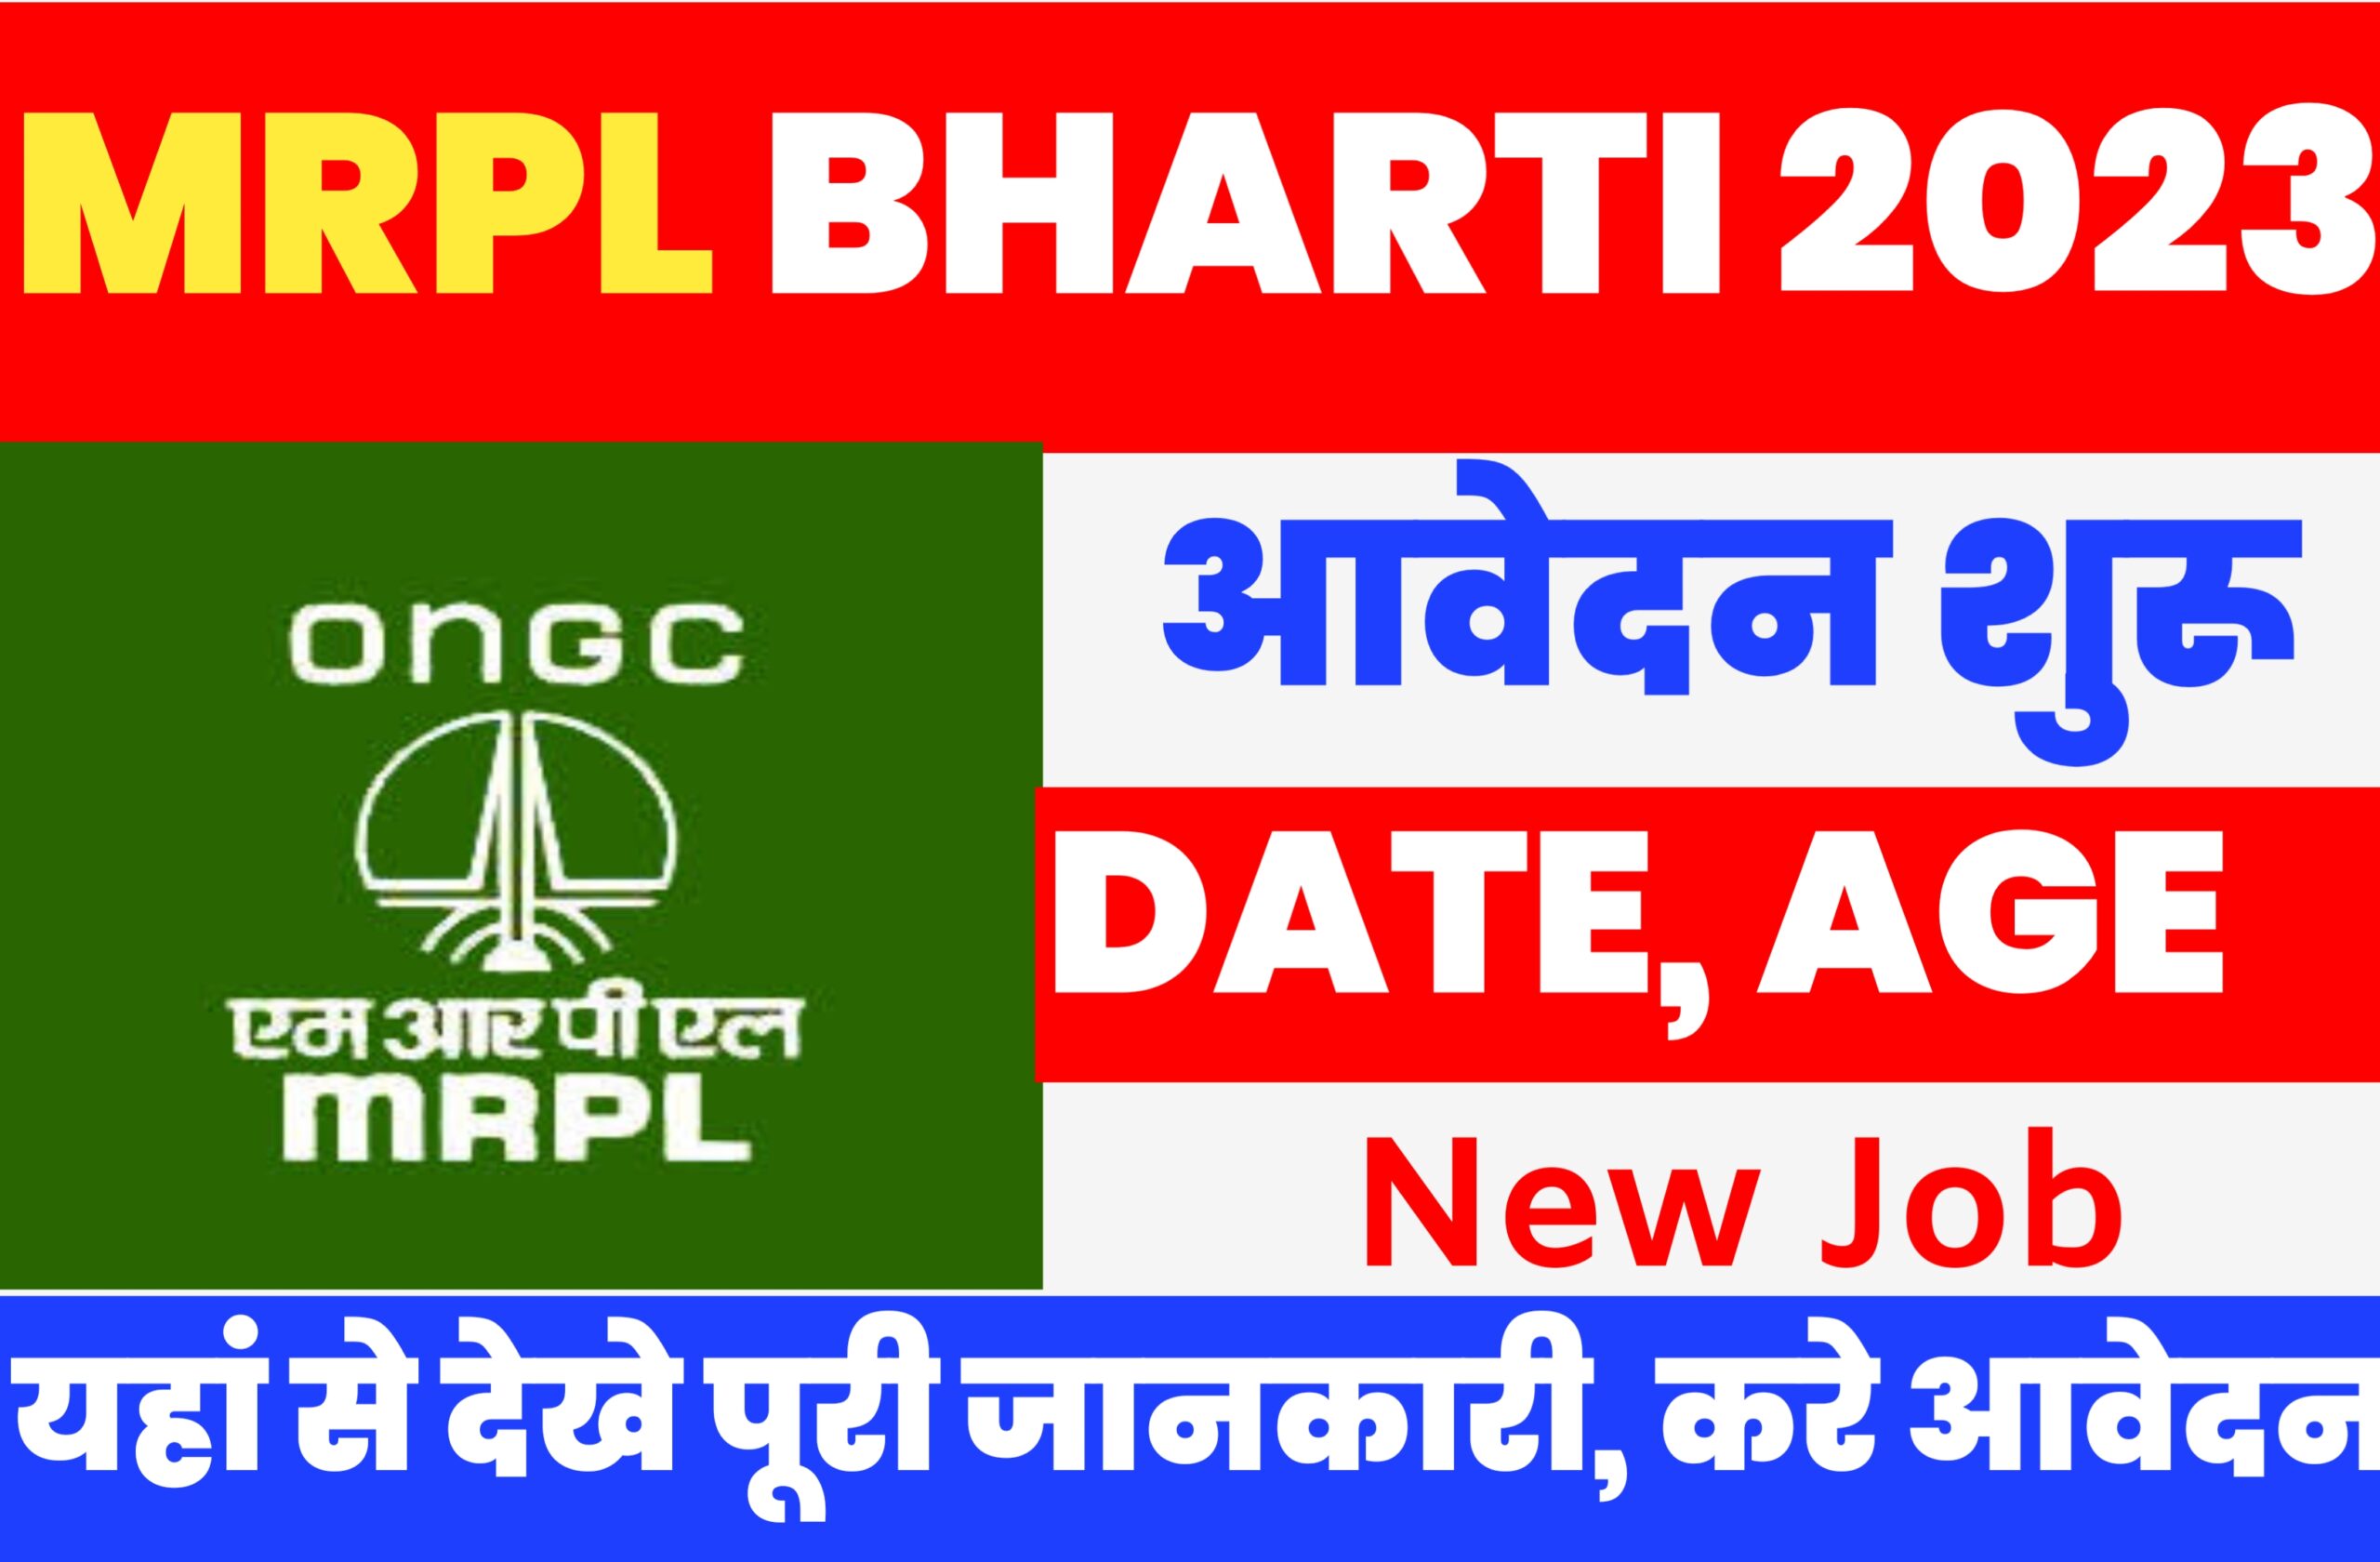 MRPL Bharti 2023